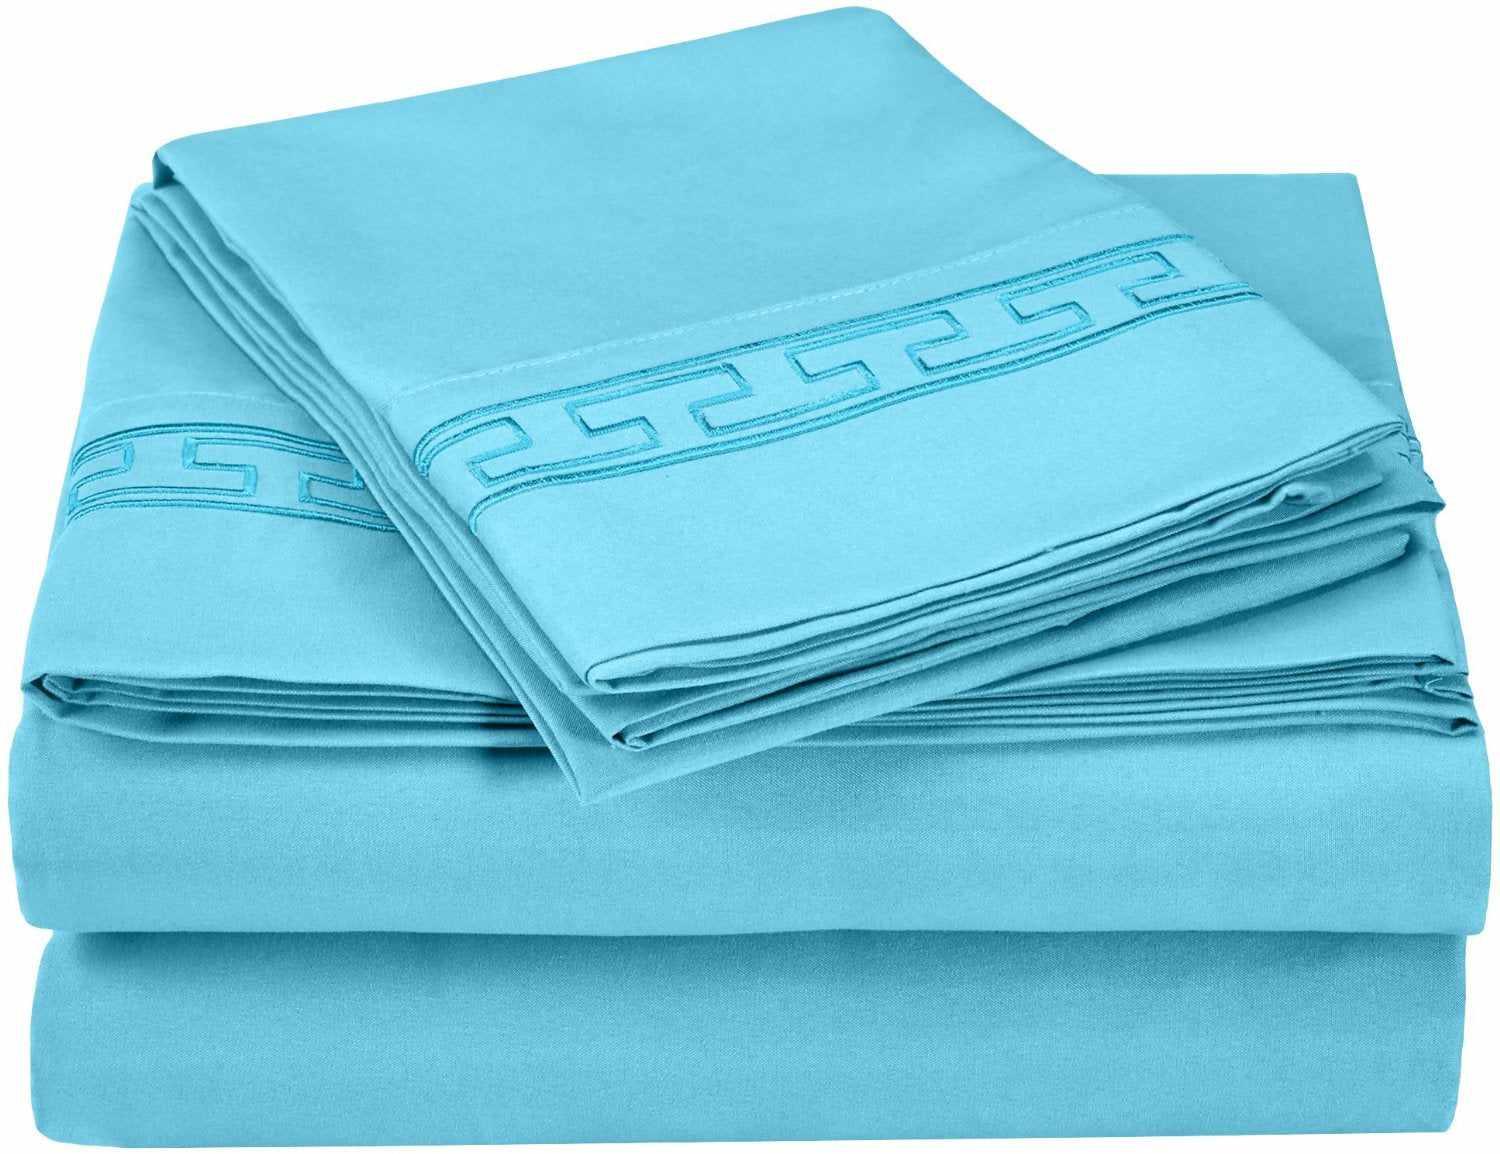 Superior Executive 3000 Series Solid Regal Embroidery Durable Soft Wrinkle Free Sheet Set - Aqua